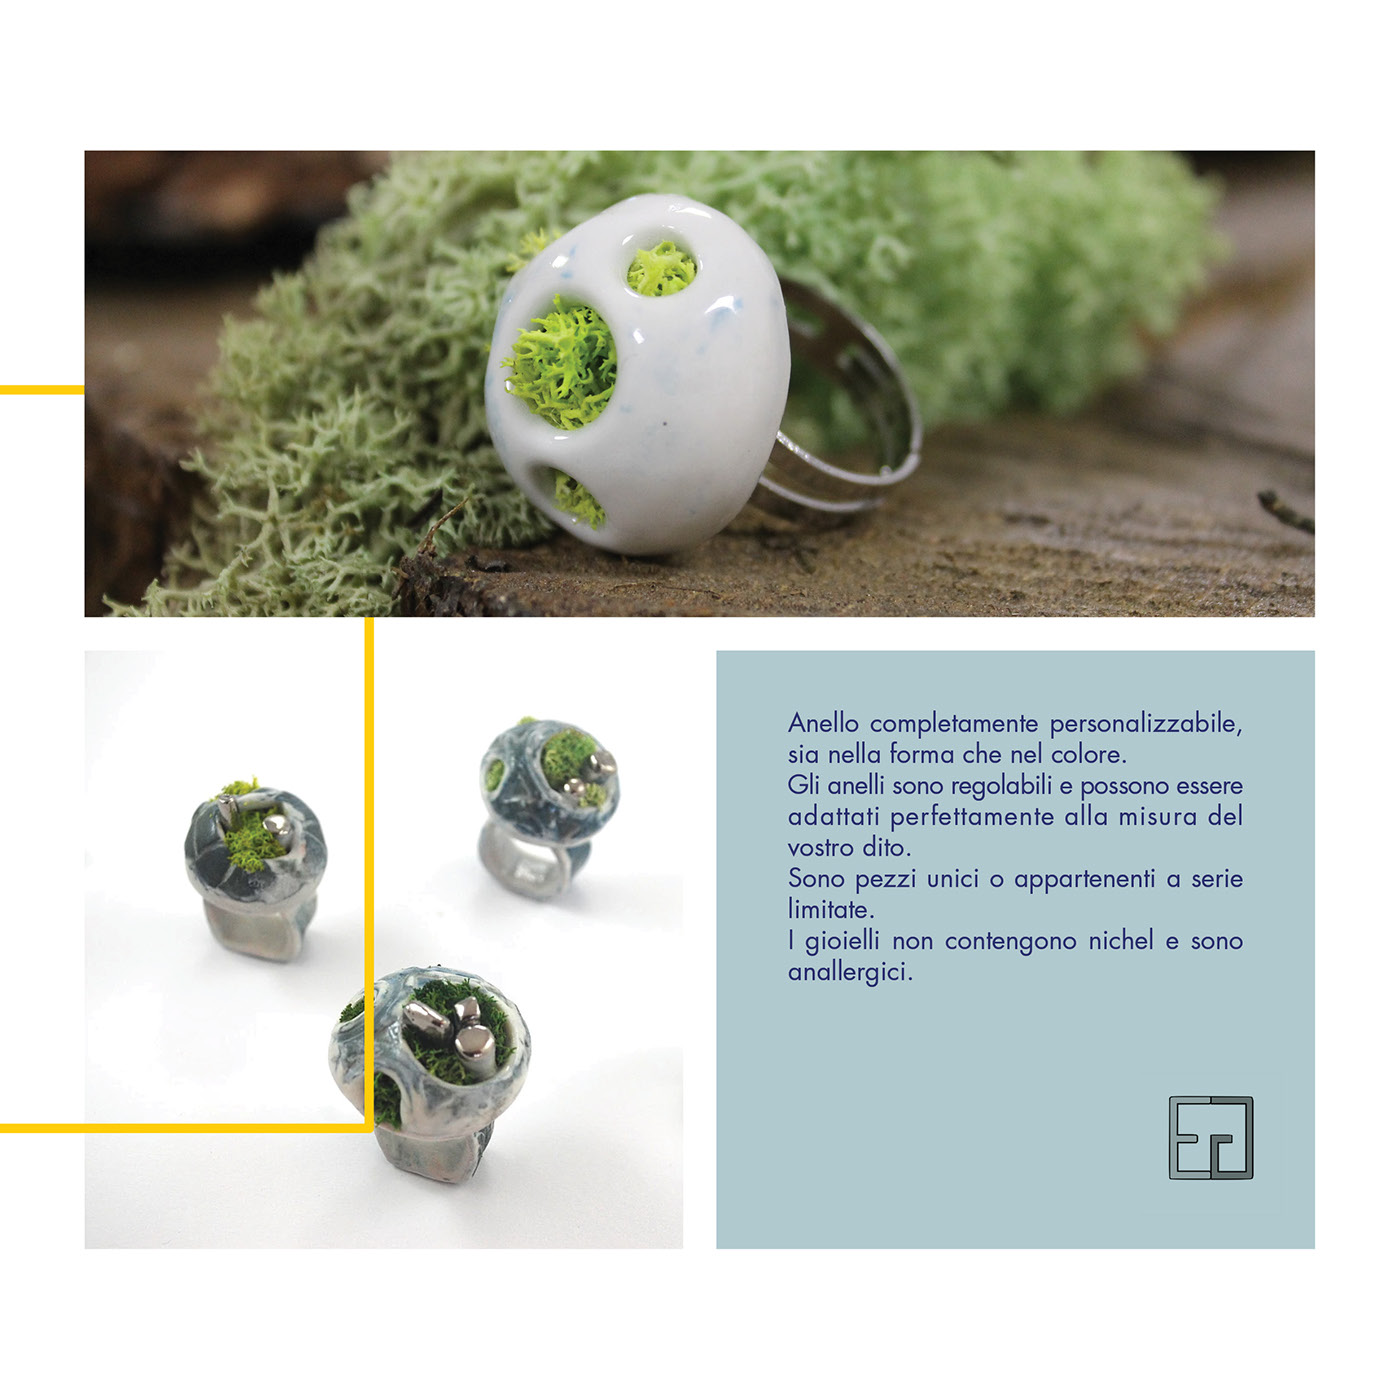 brochure design leaflet jewels ceramics 